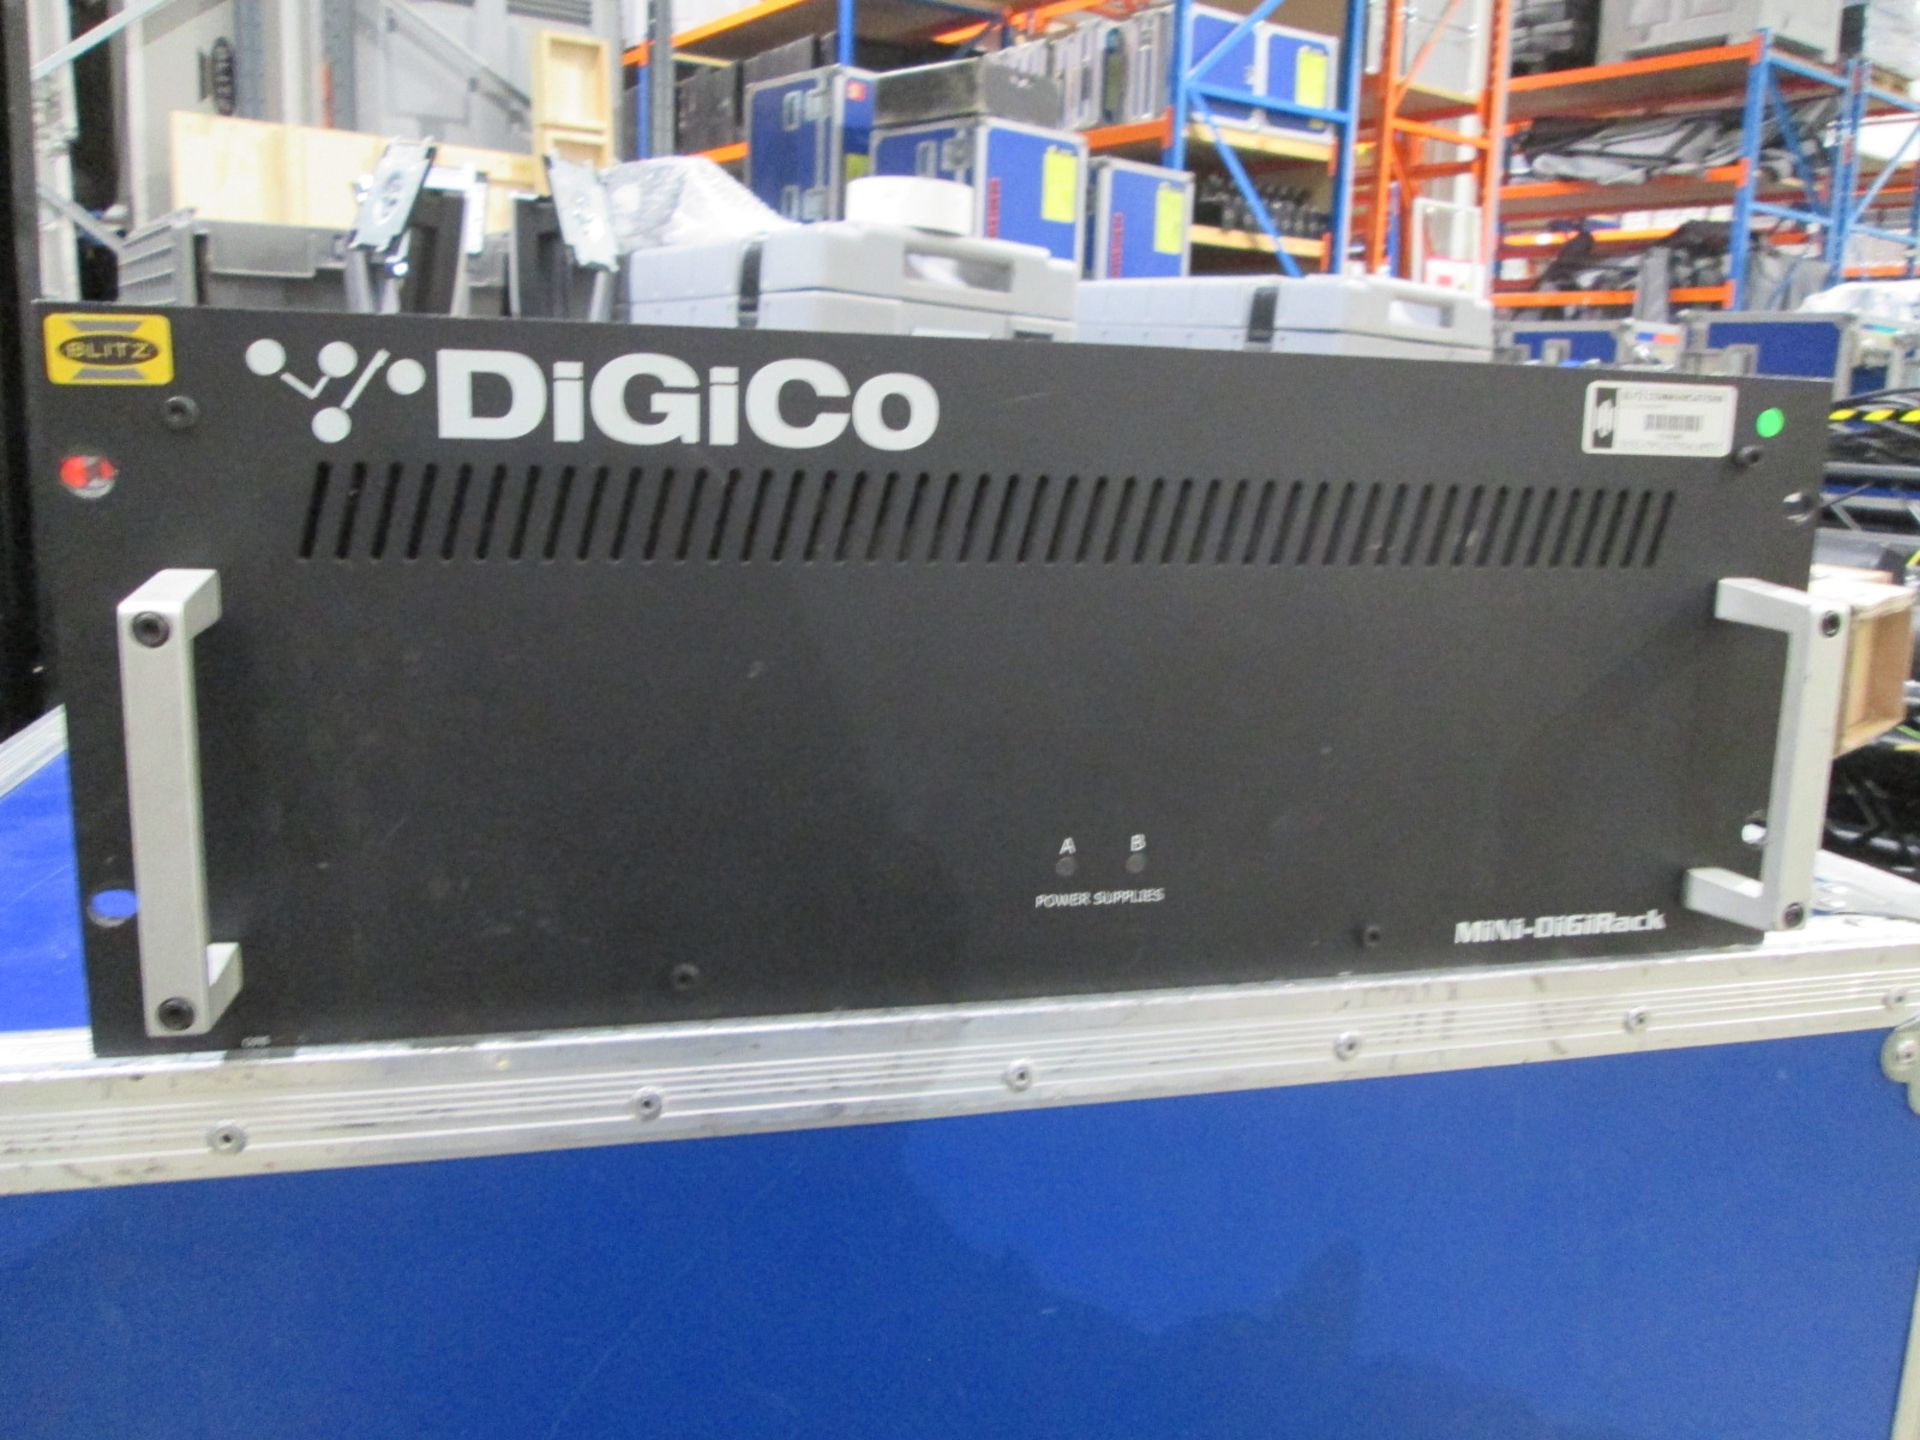 DigiCo MiNi-Rack Input / Output Frame. S/N 400073 0601